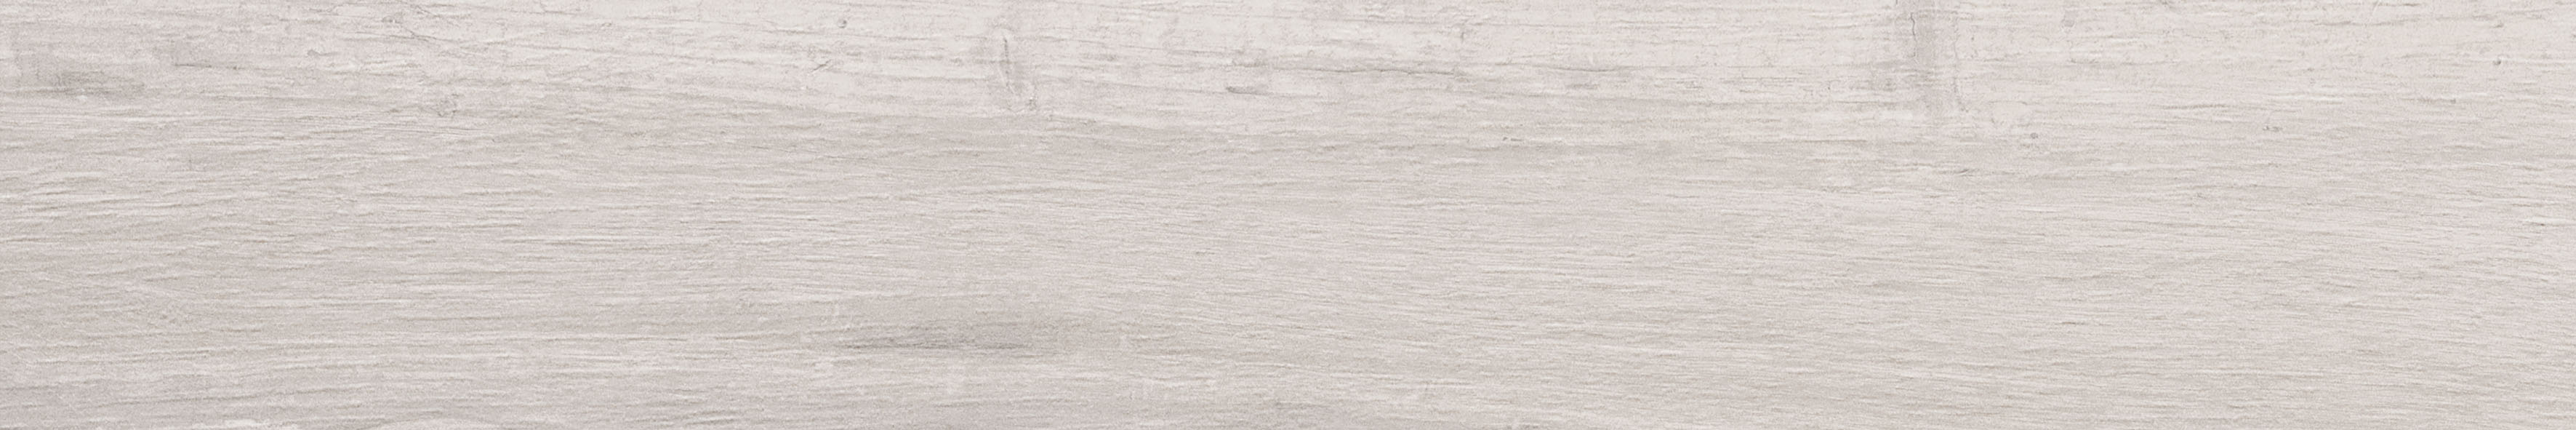 Noem Gres Stockholm Bodenfliesen Holzoptik Weiß matt 10x60 cm rekt. R10B